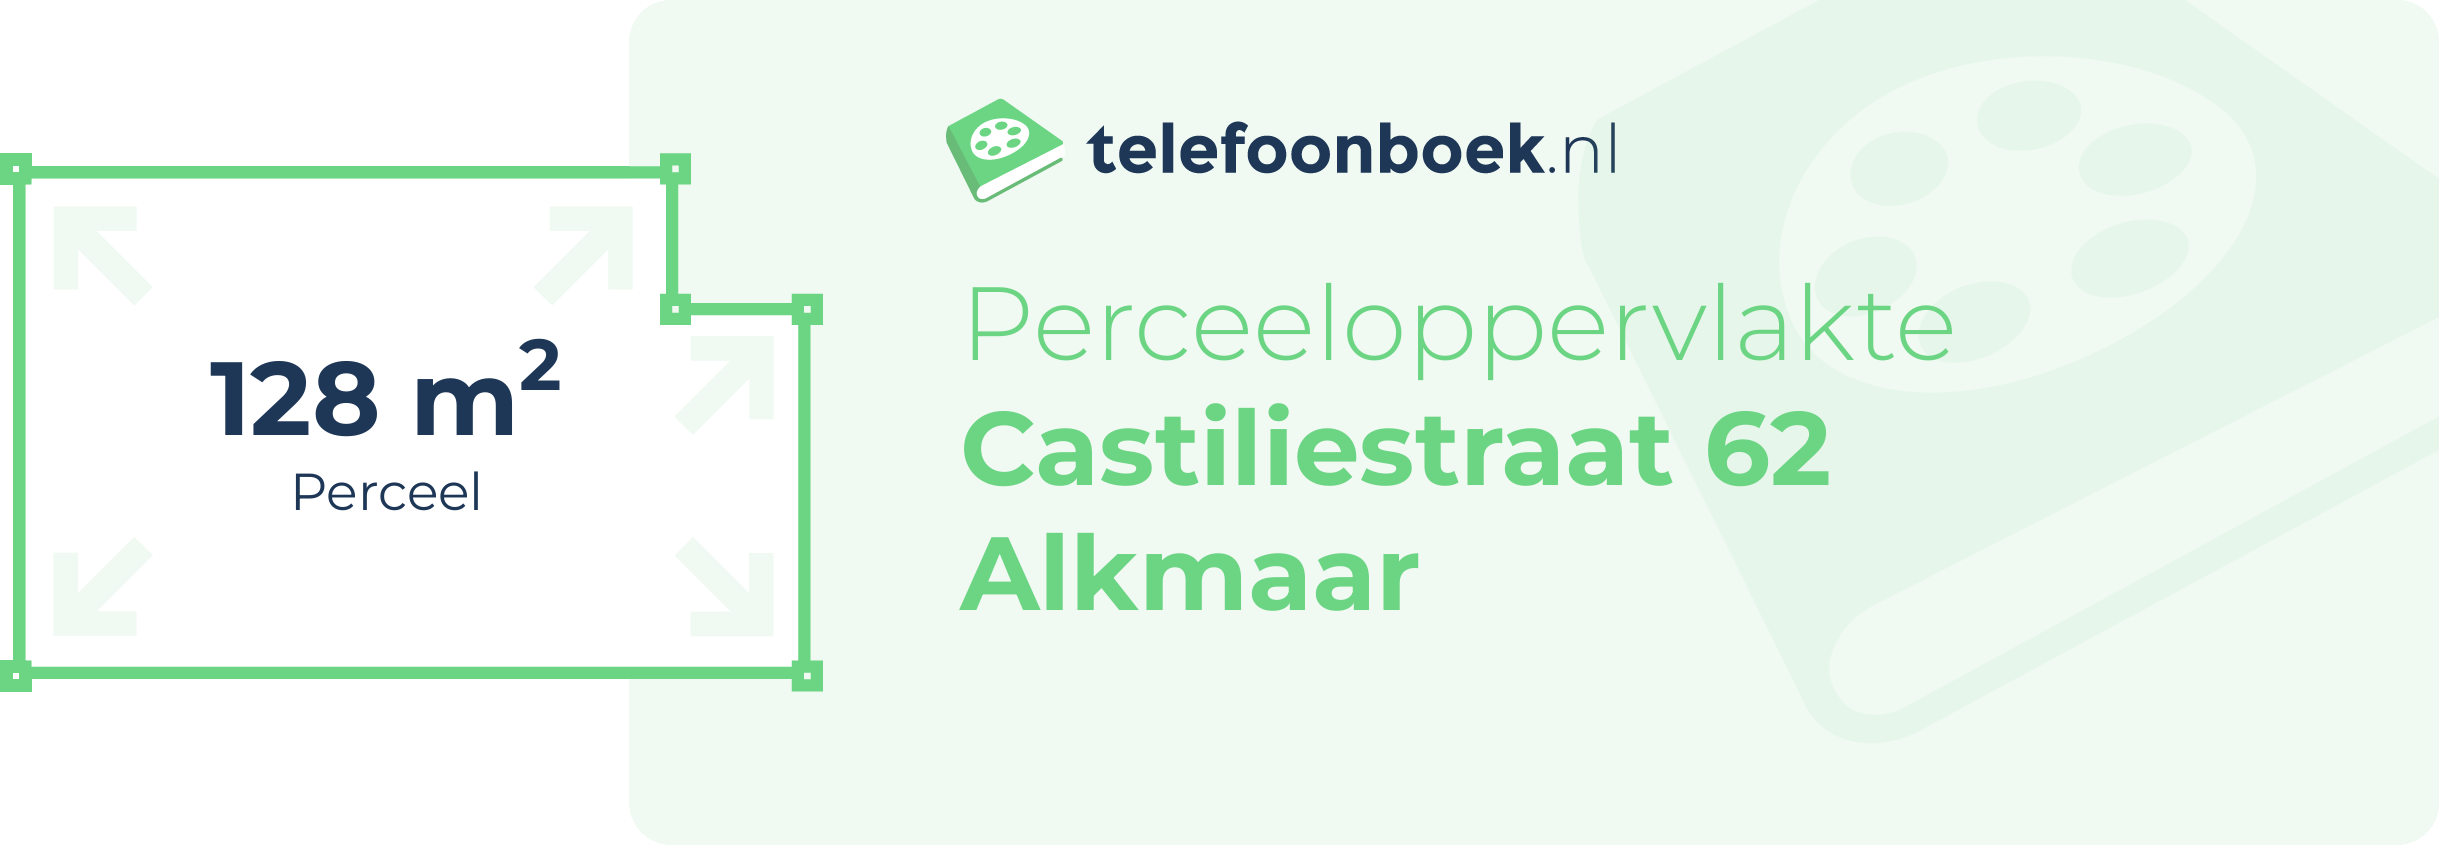 Perceeloppervlakte Castiliestraat 62 Alkmaar